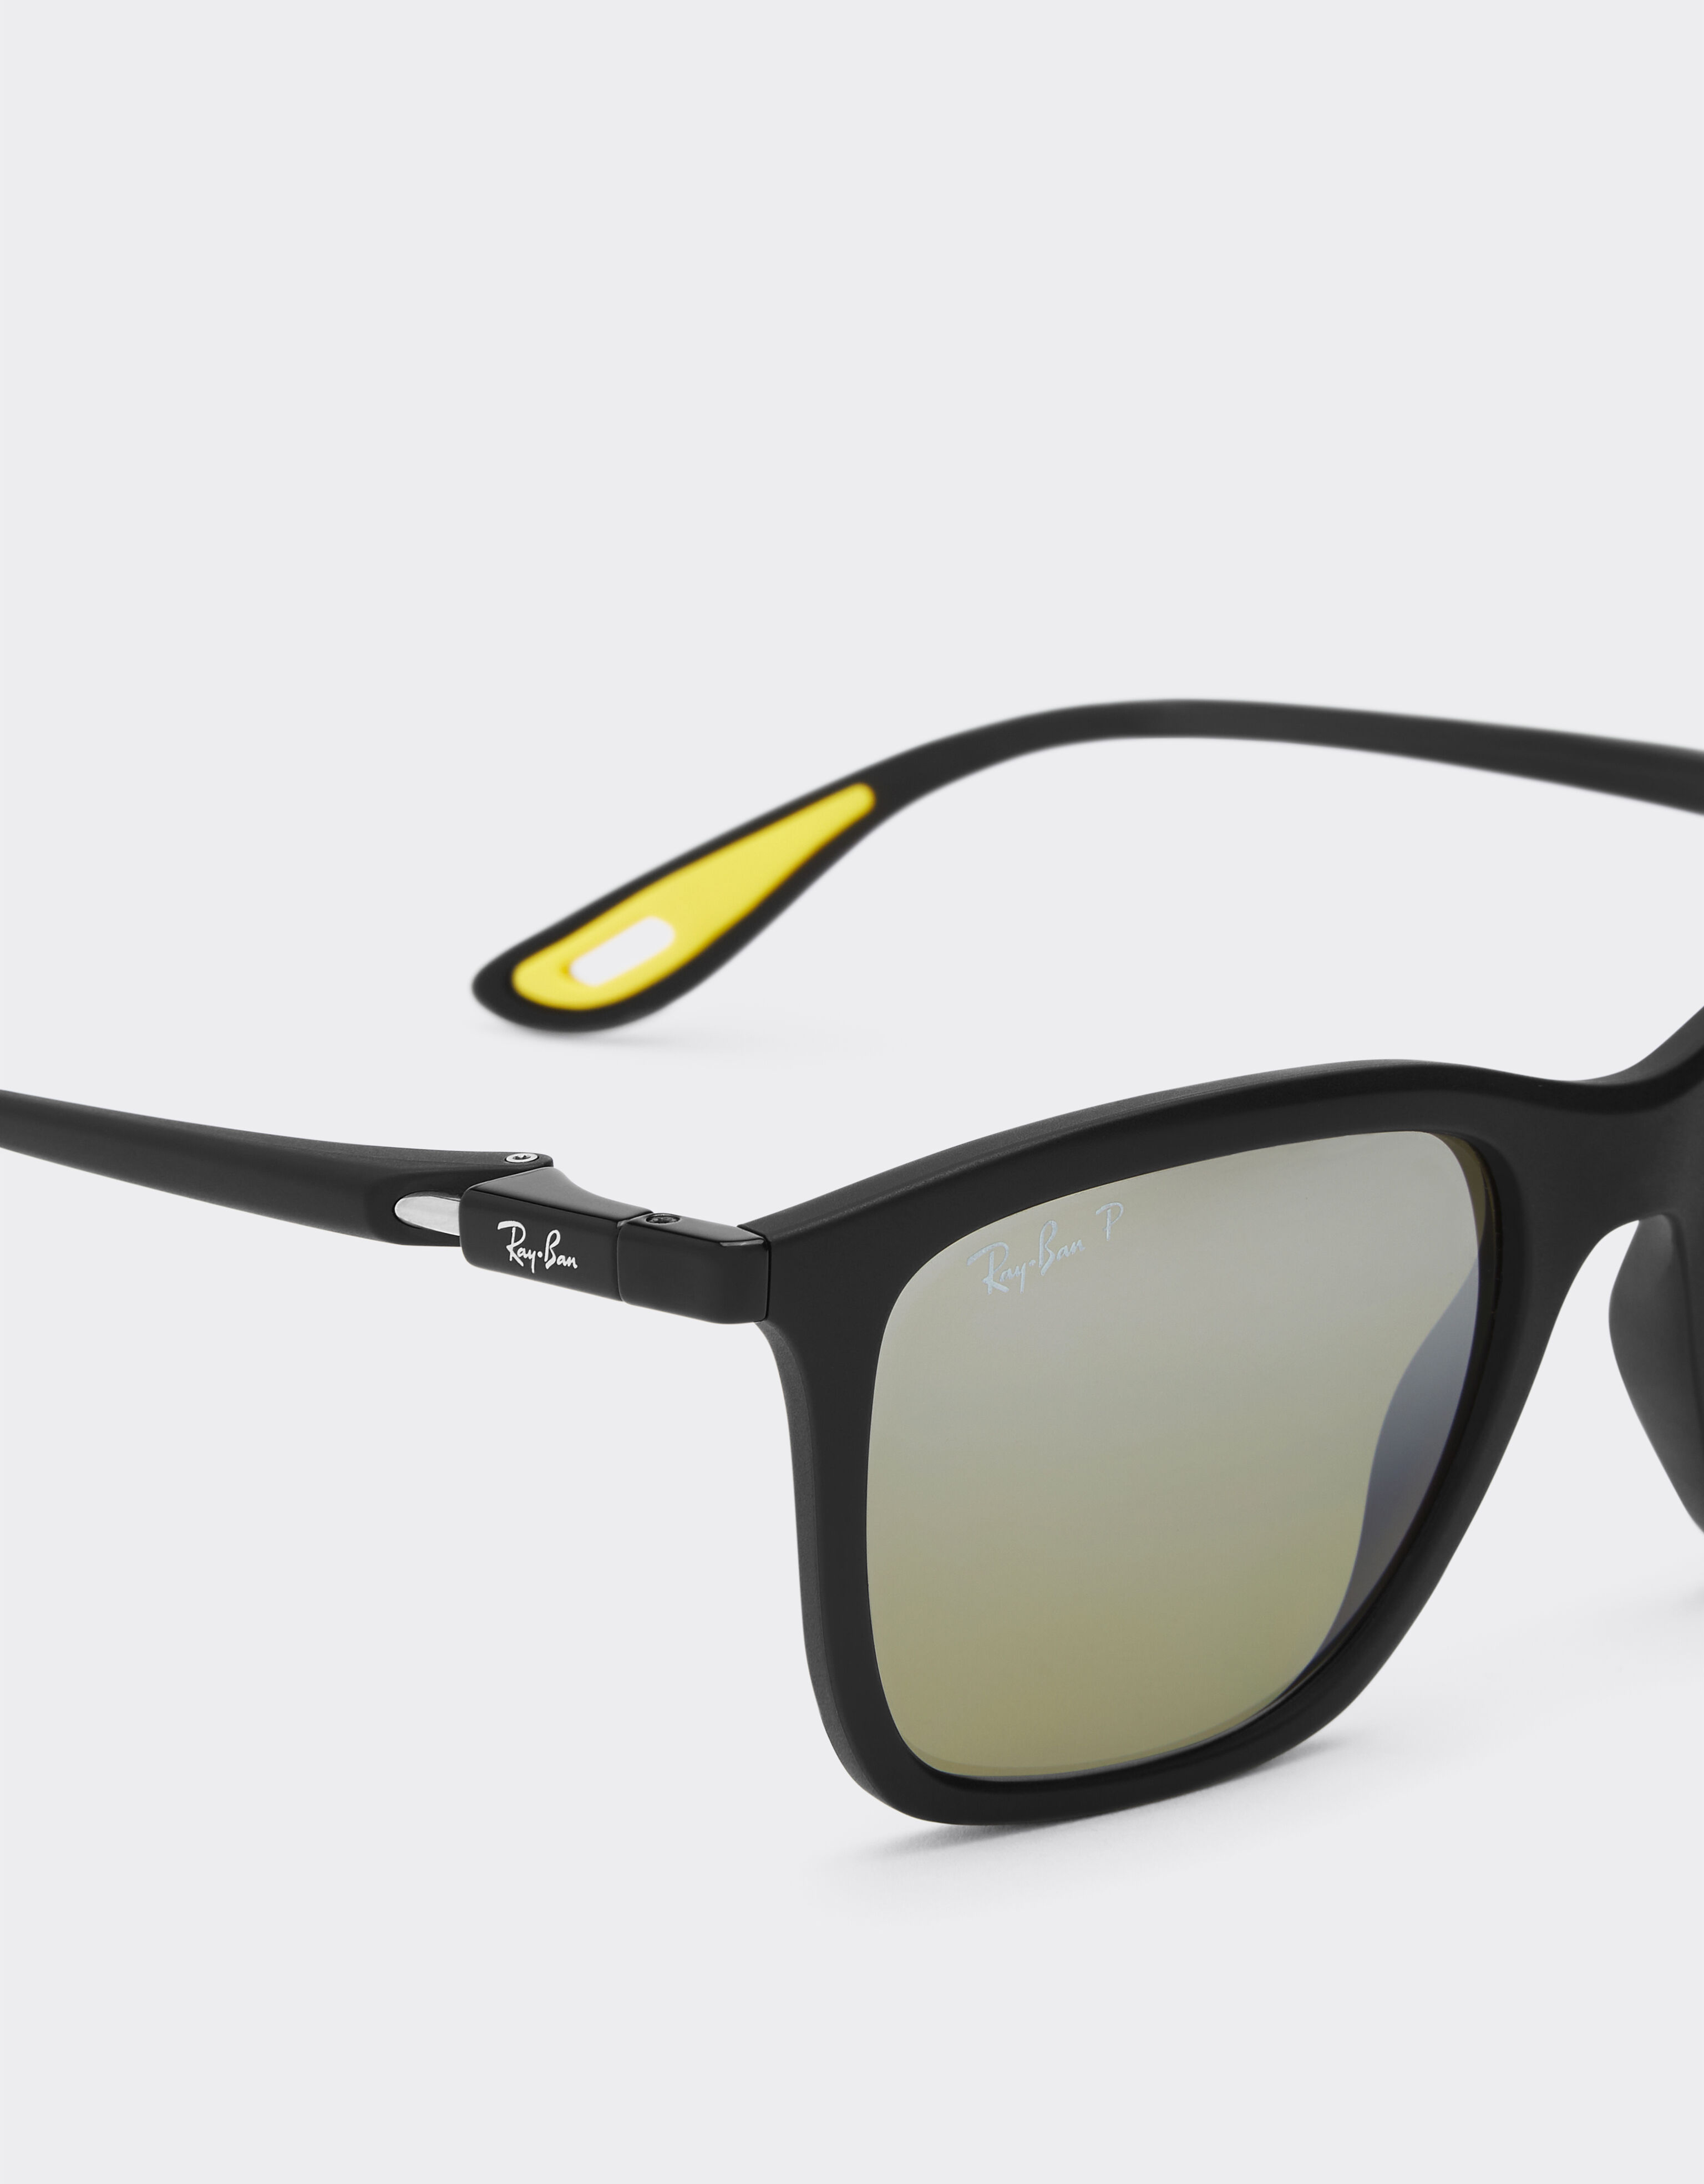 Ferrari Ray-Ban for Scuderia Ferrari 0RB4433M Carlos Sainz sunglasses - Special Edition Black Matt F1257f